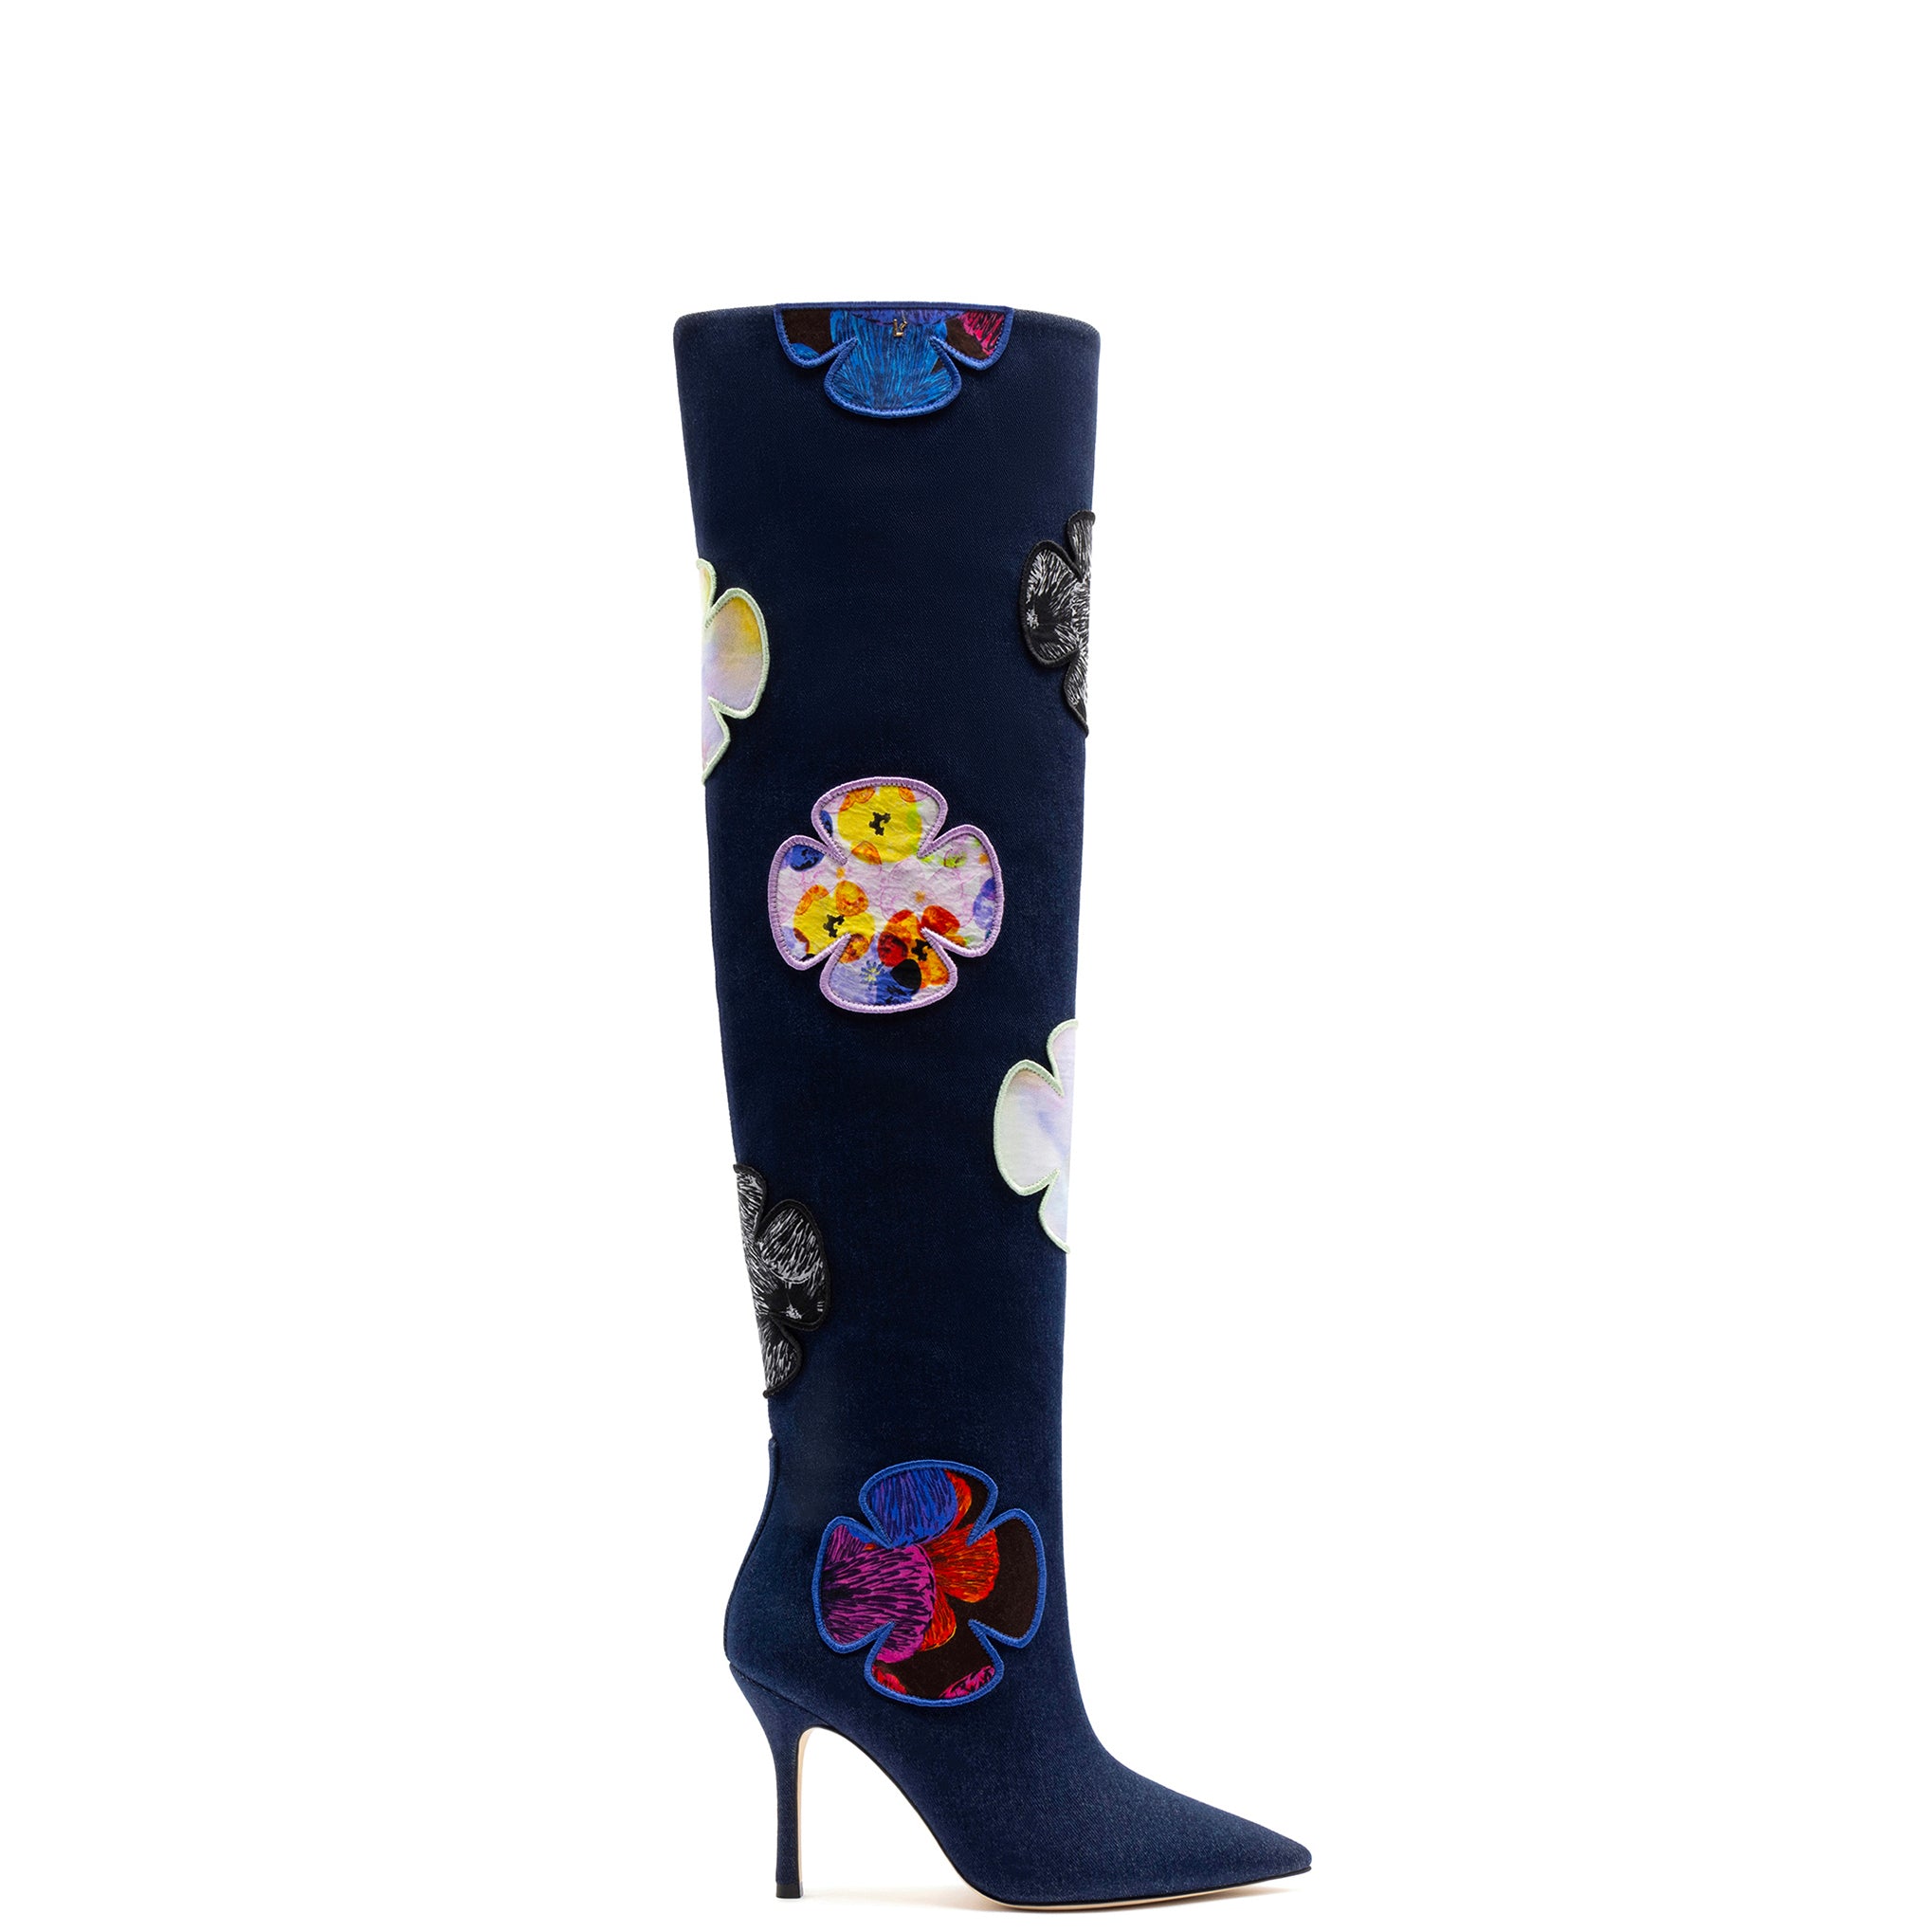 Larroudé for Jonathan Cohen: Kate Boot In Blue Denim and Multicolor Patchwork